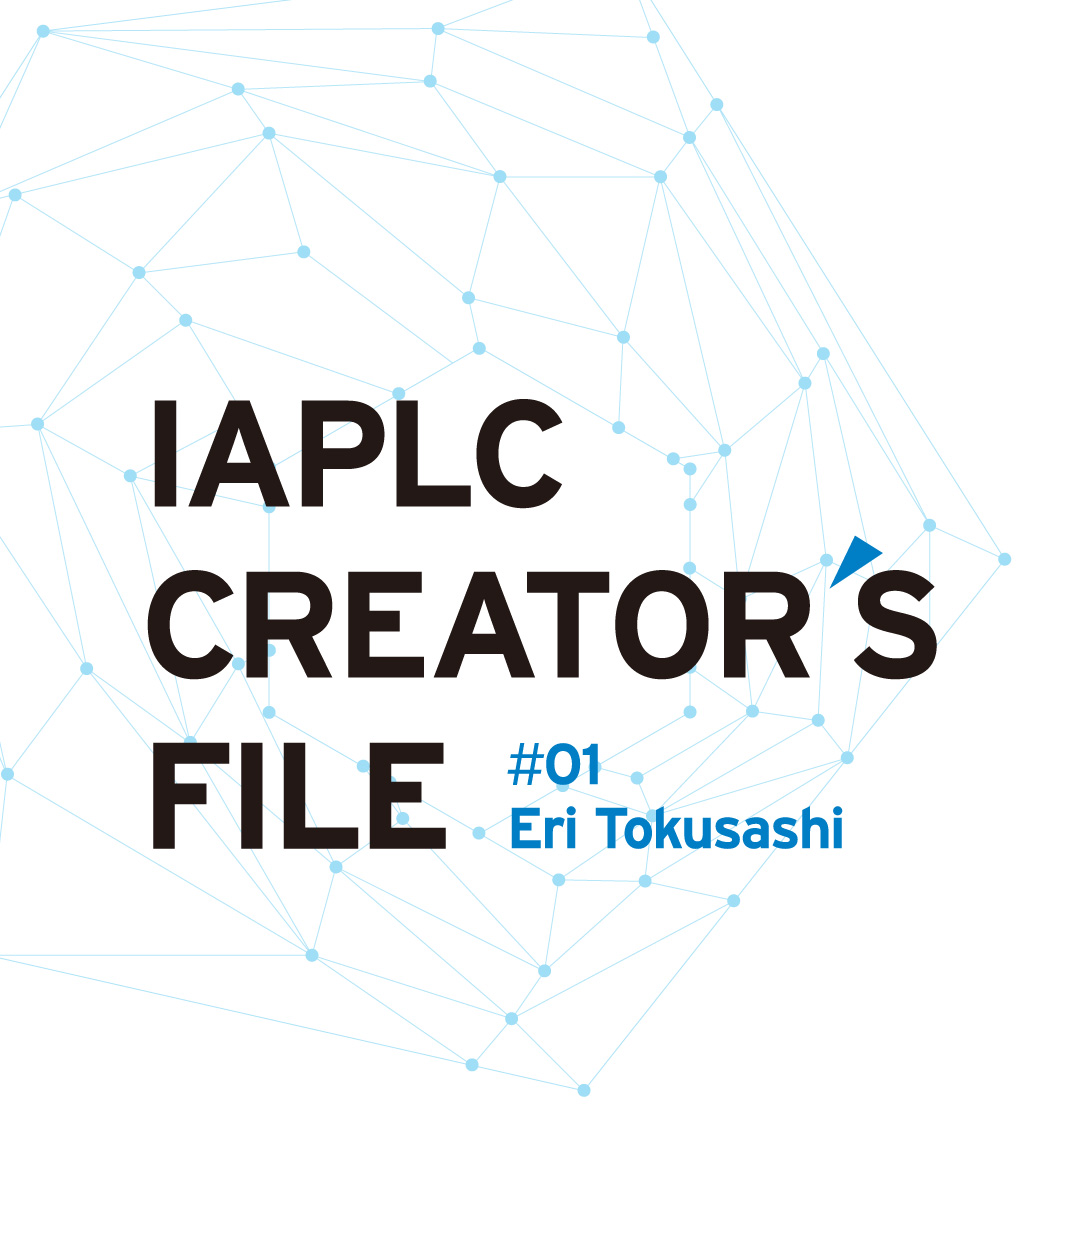 IAPLC CREATOR’S FILE #01 Eri Tokusashi